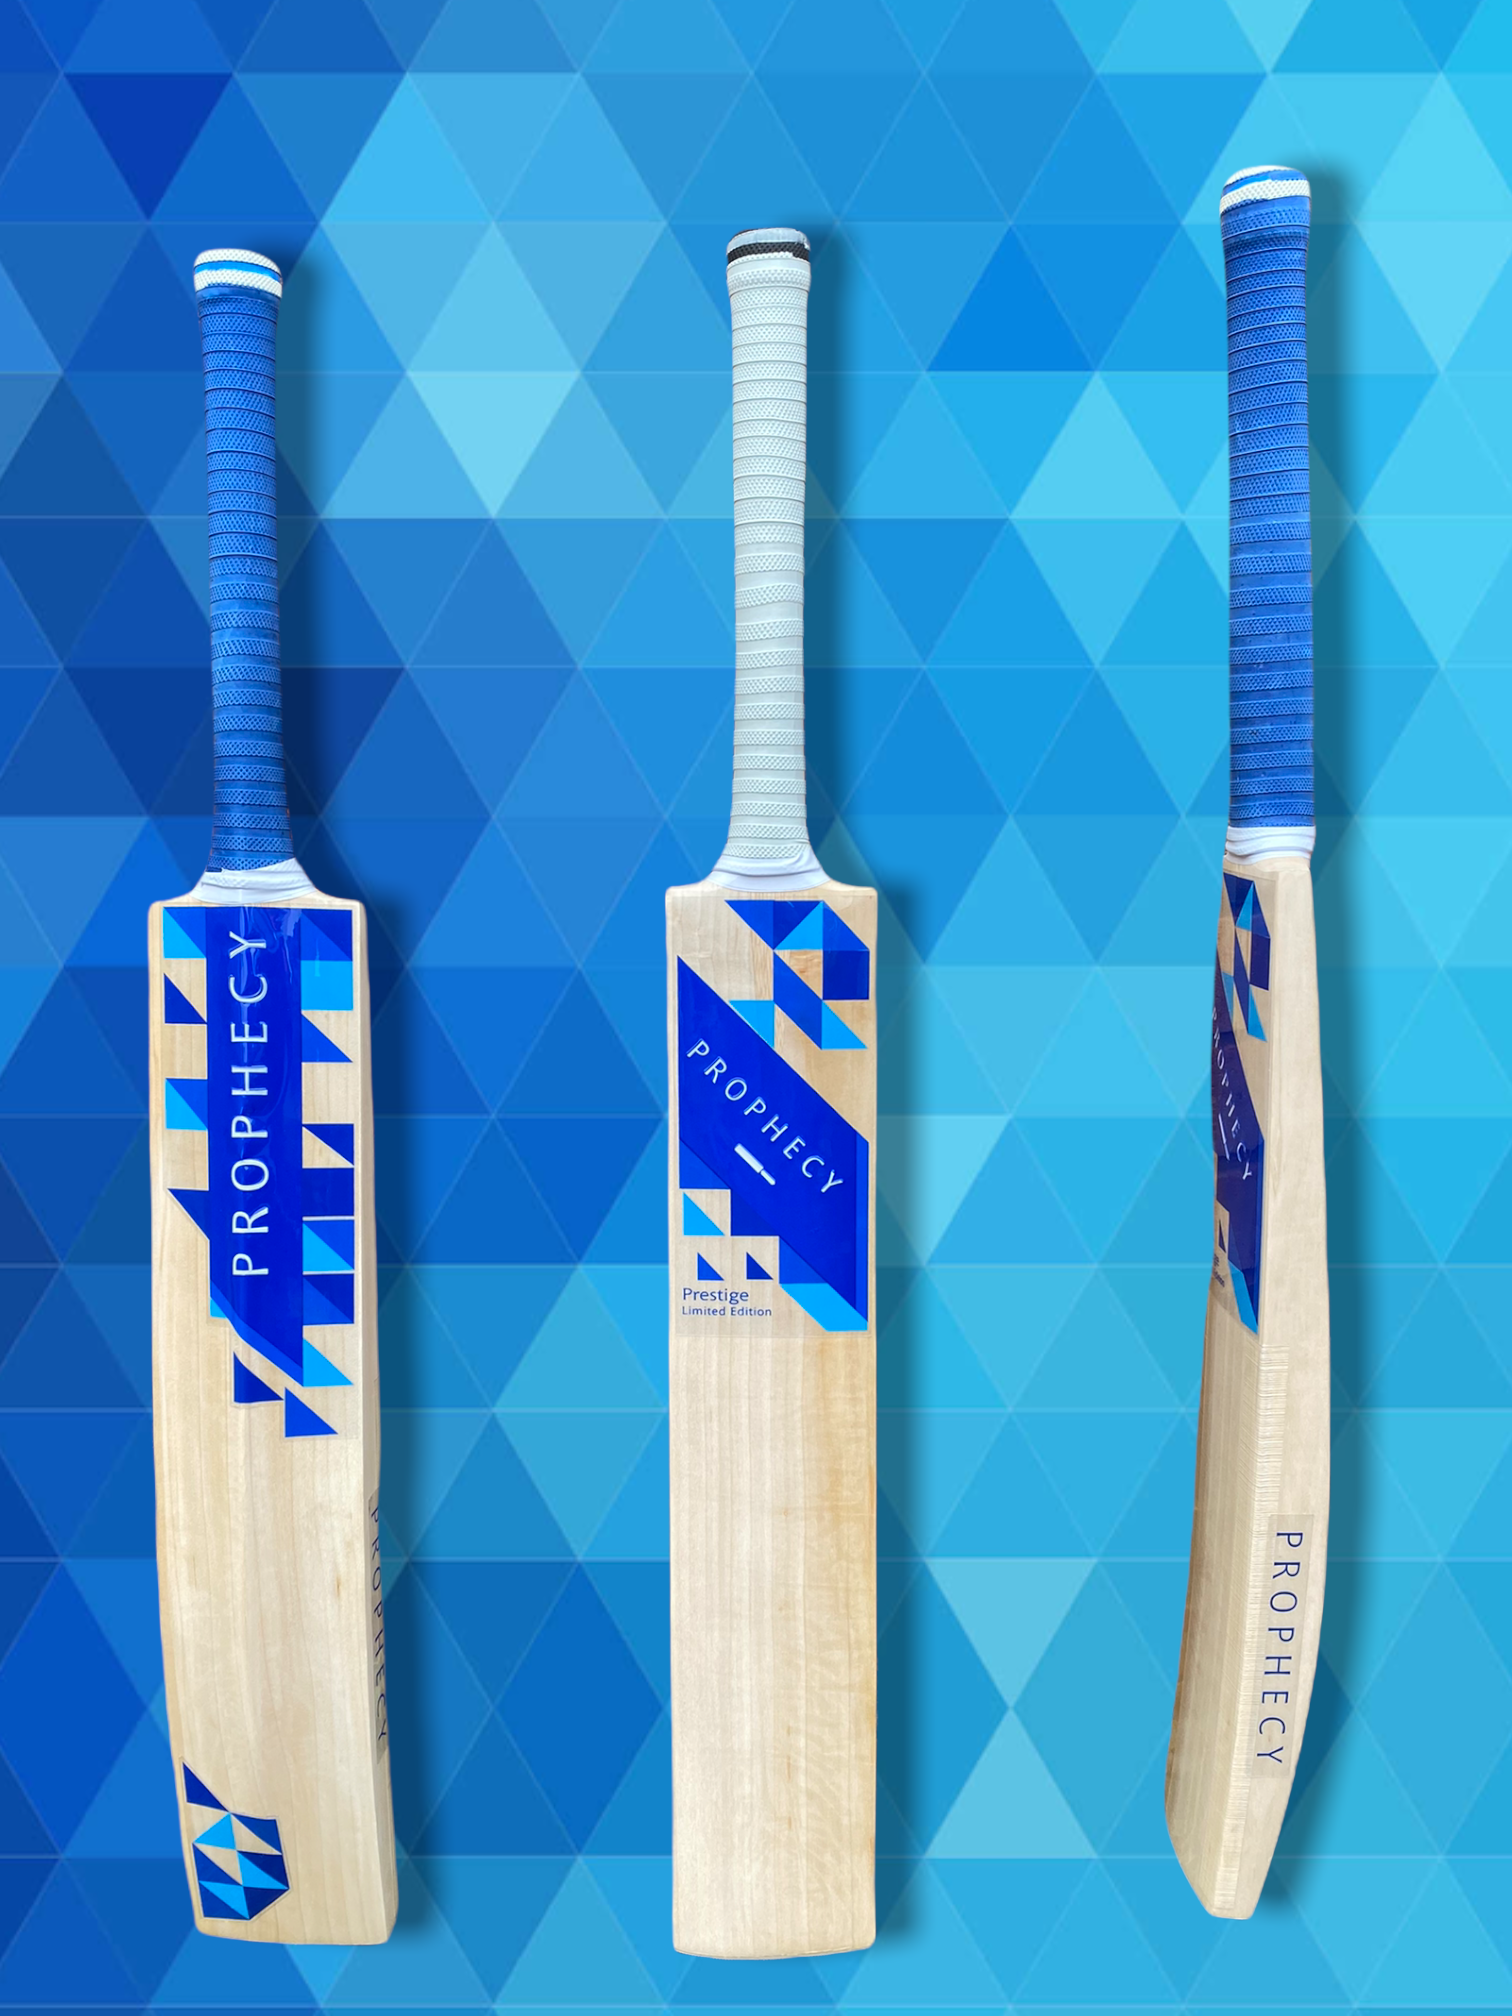 Stunning cricket bats